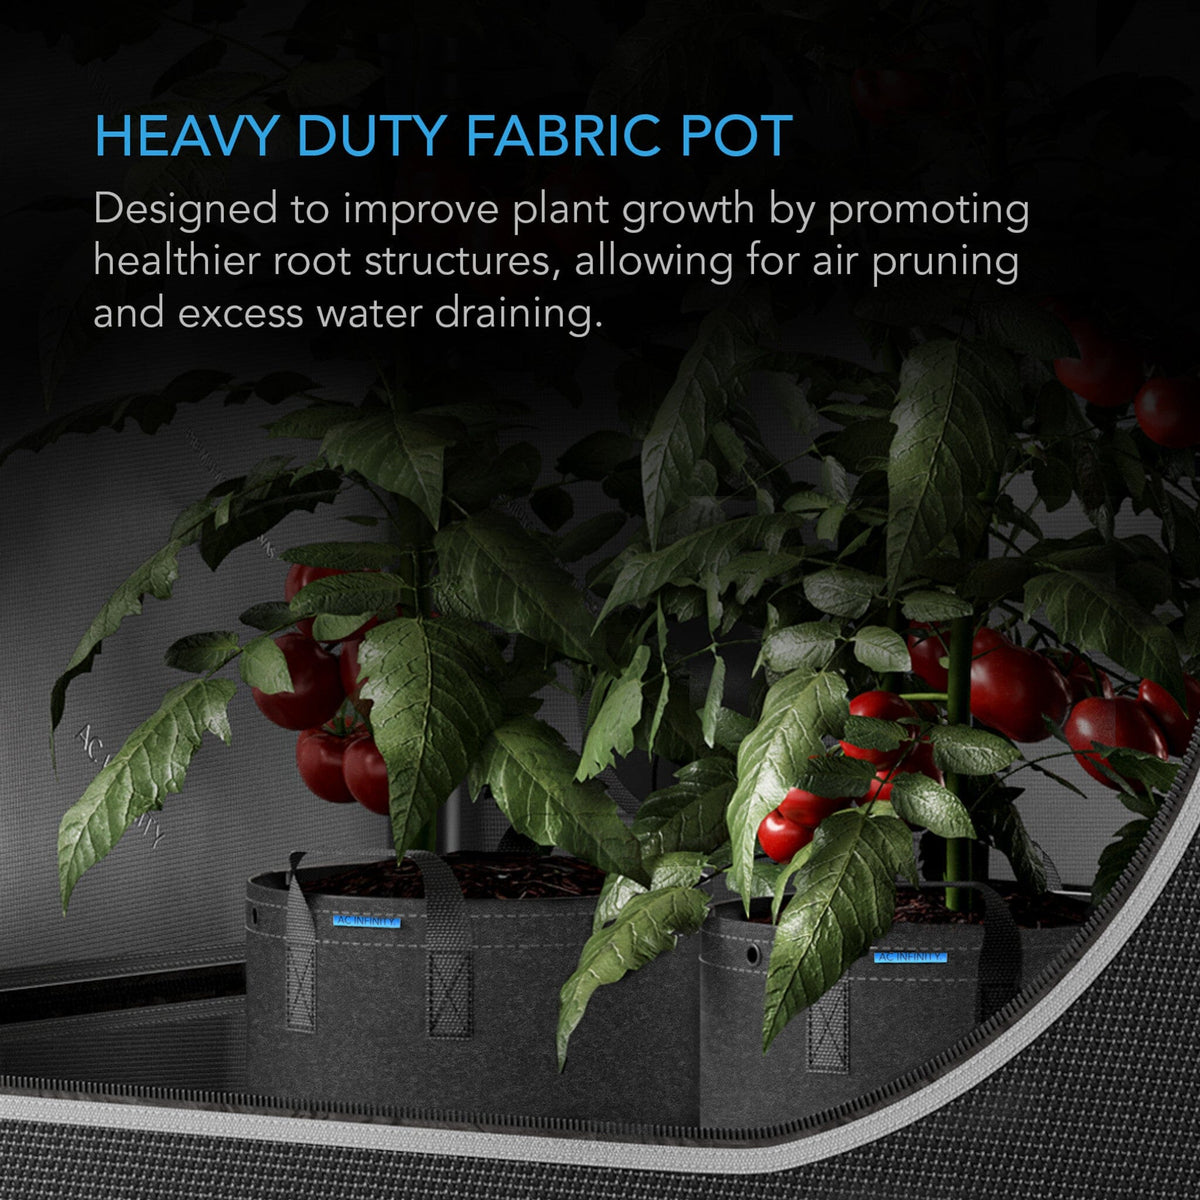 Heavy duty fabric pots by AC Infinity